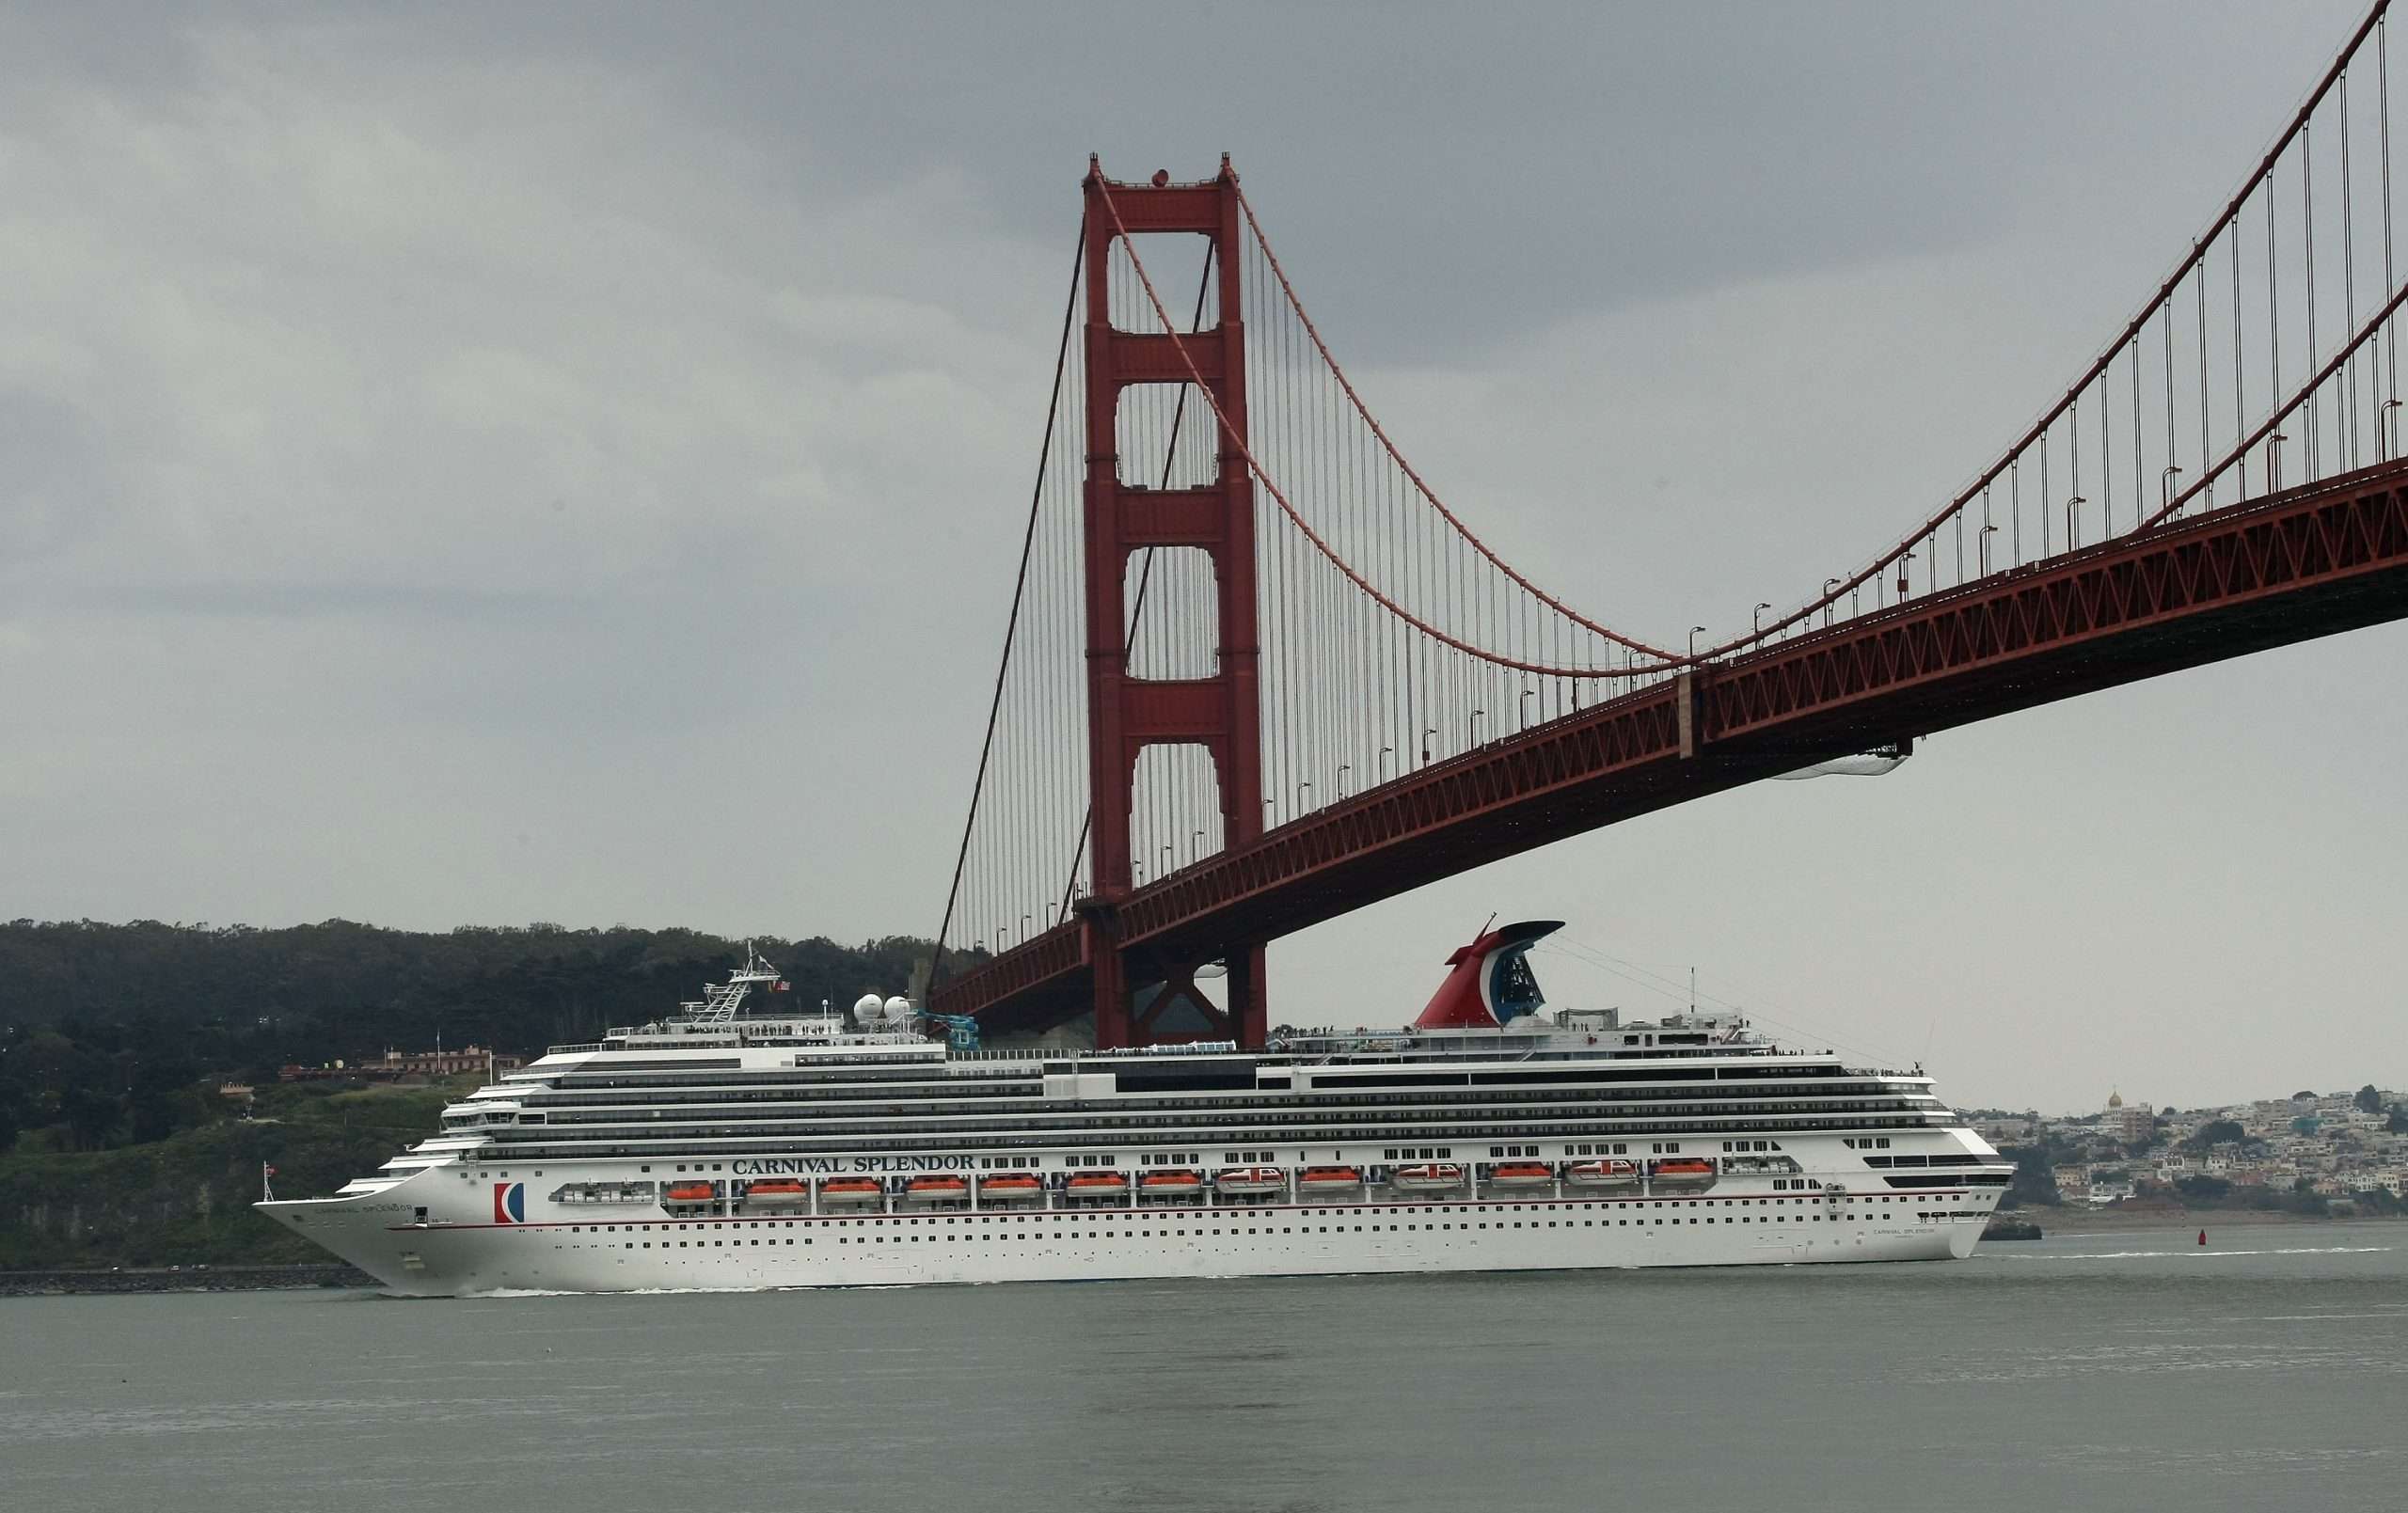 Bahia Cruise Ship: Cruise Ships That Depart From San Francisco